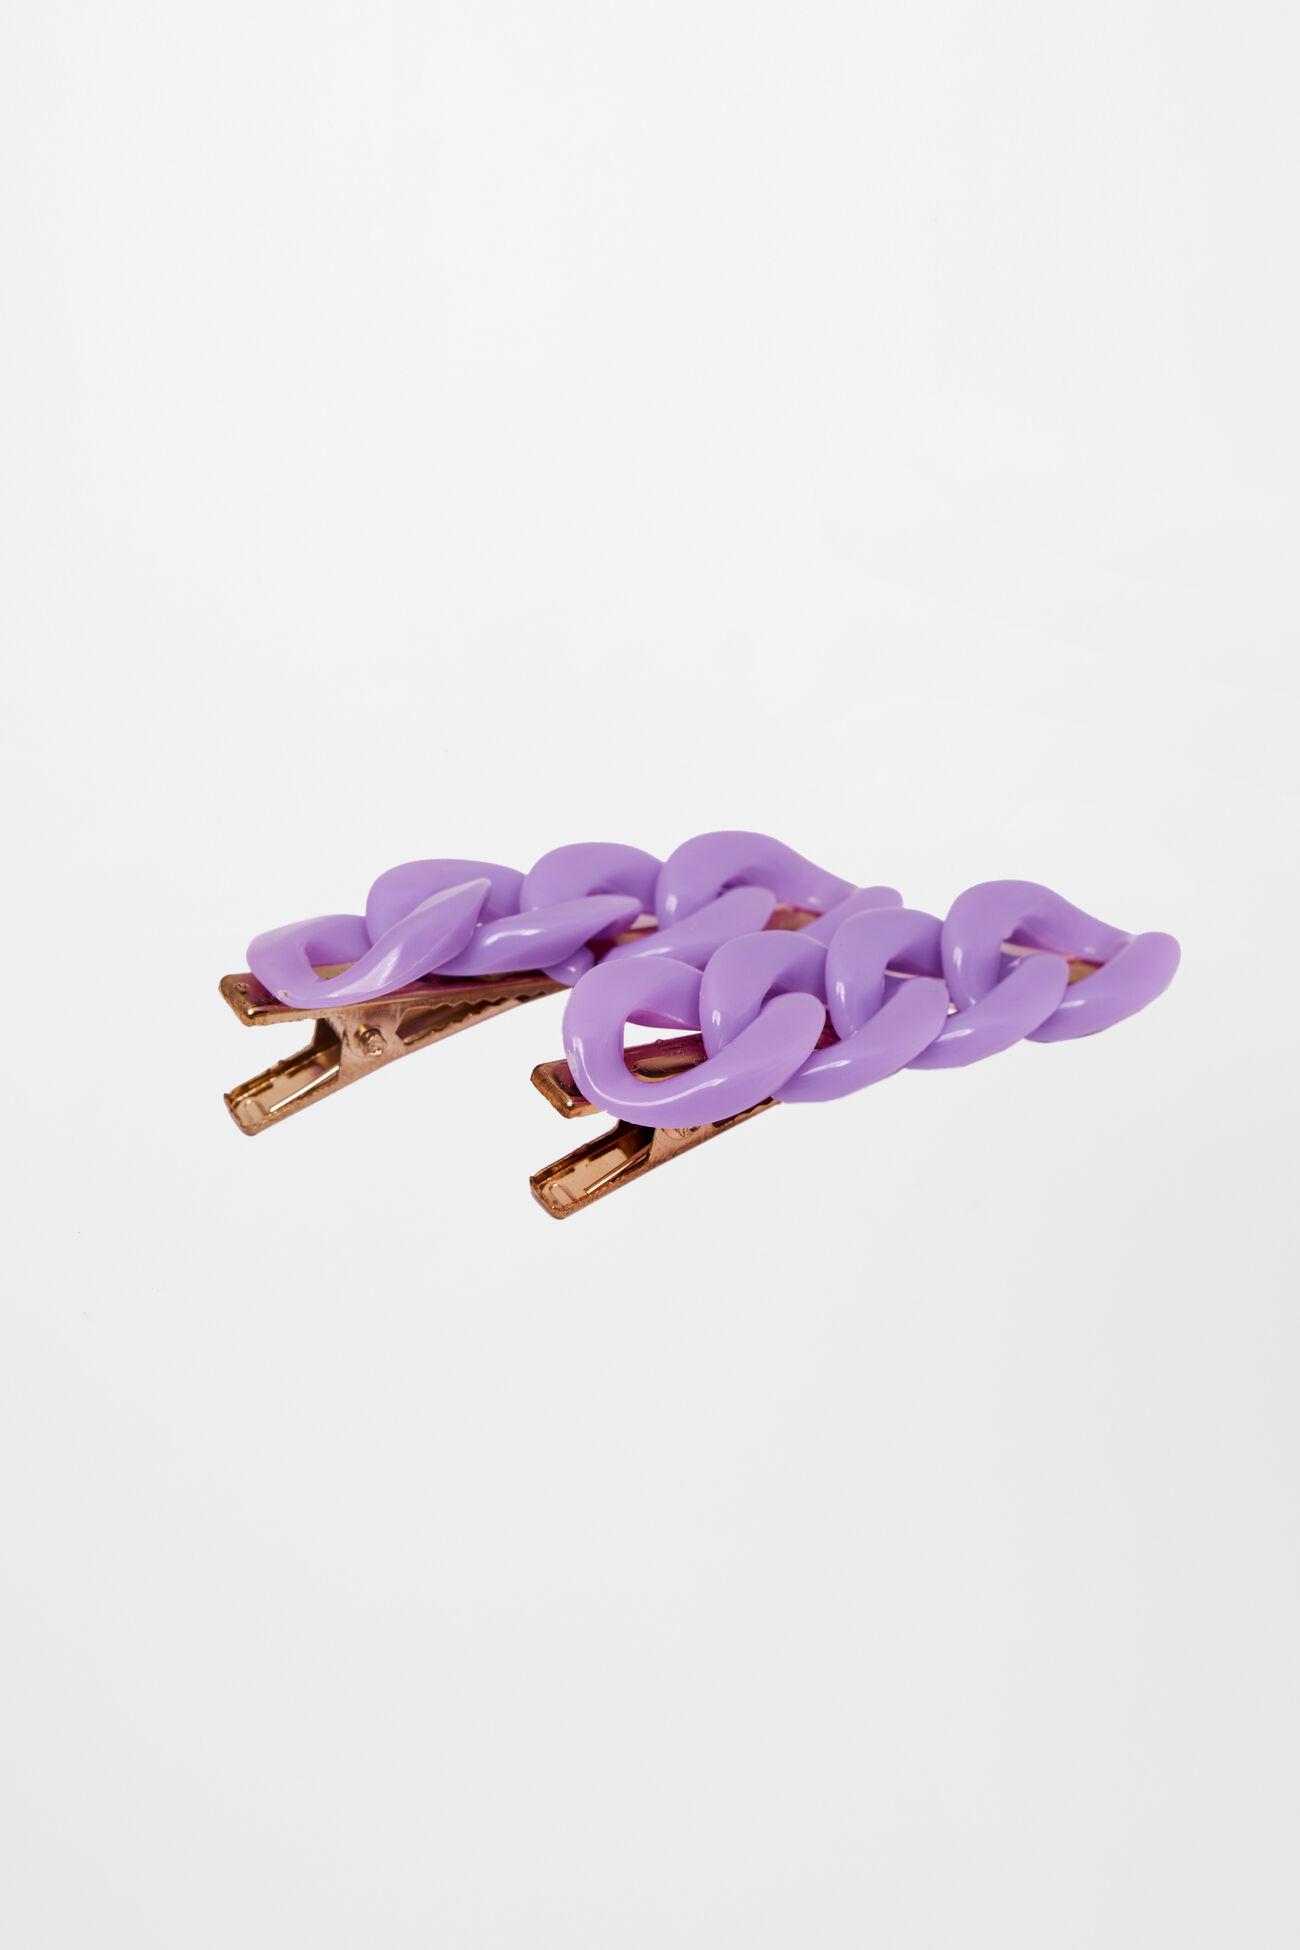 purple hairpin